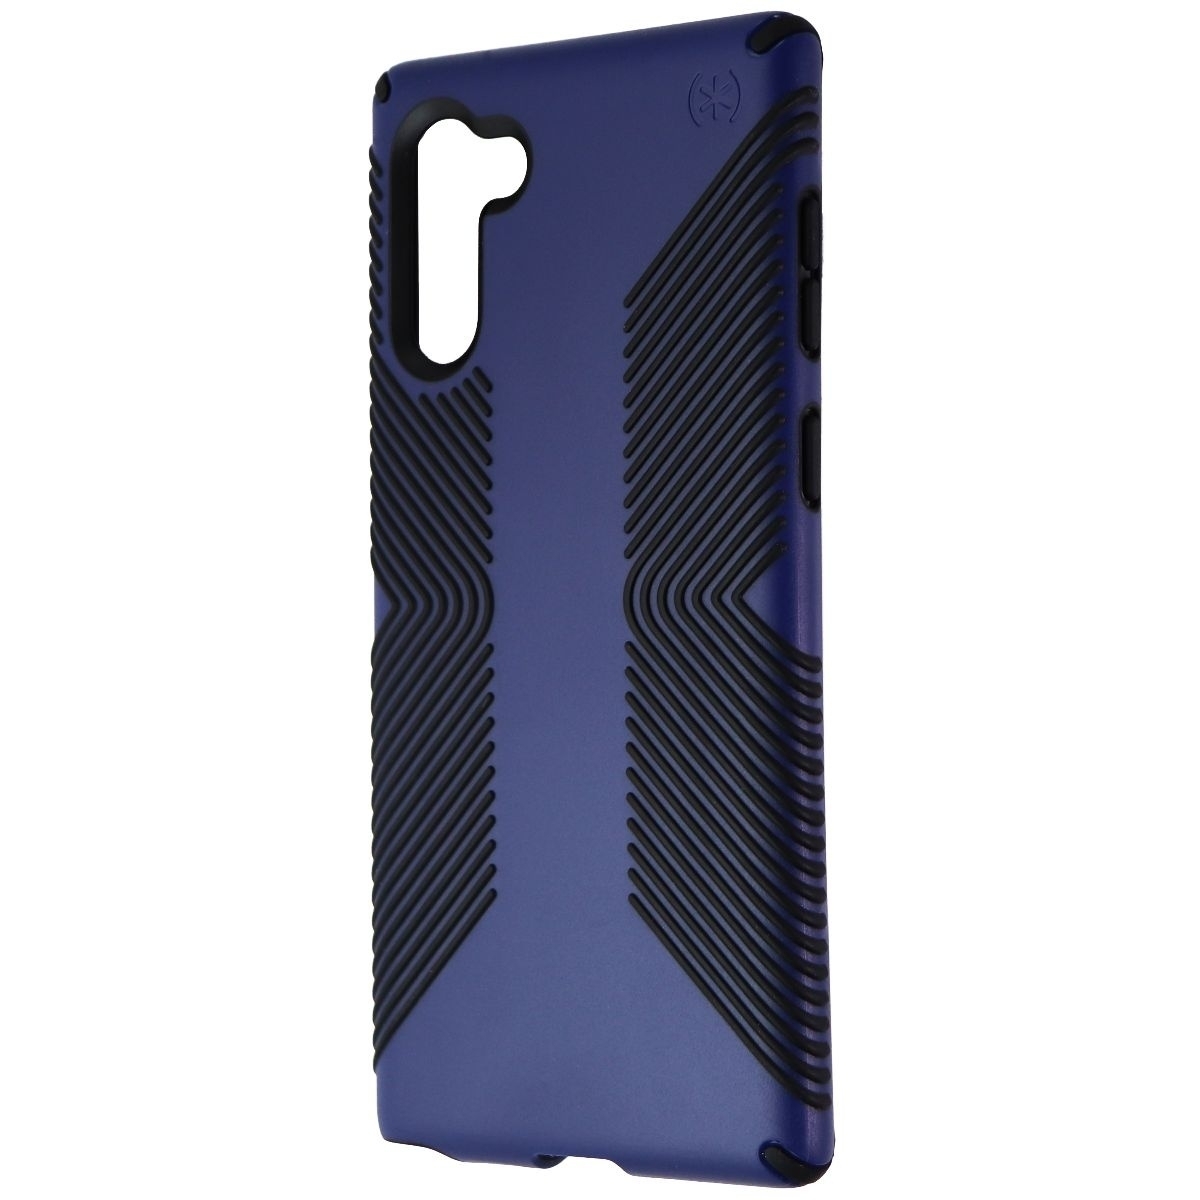 Speck Presidio Grip Hardshell Case For Galaxy Note10 - Coastal Blue & Black